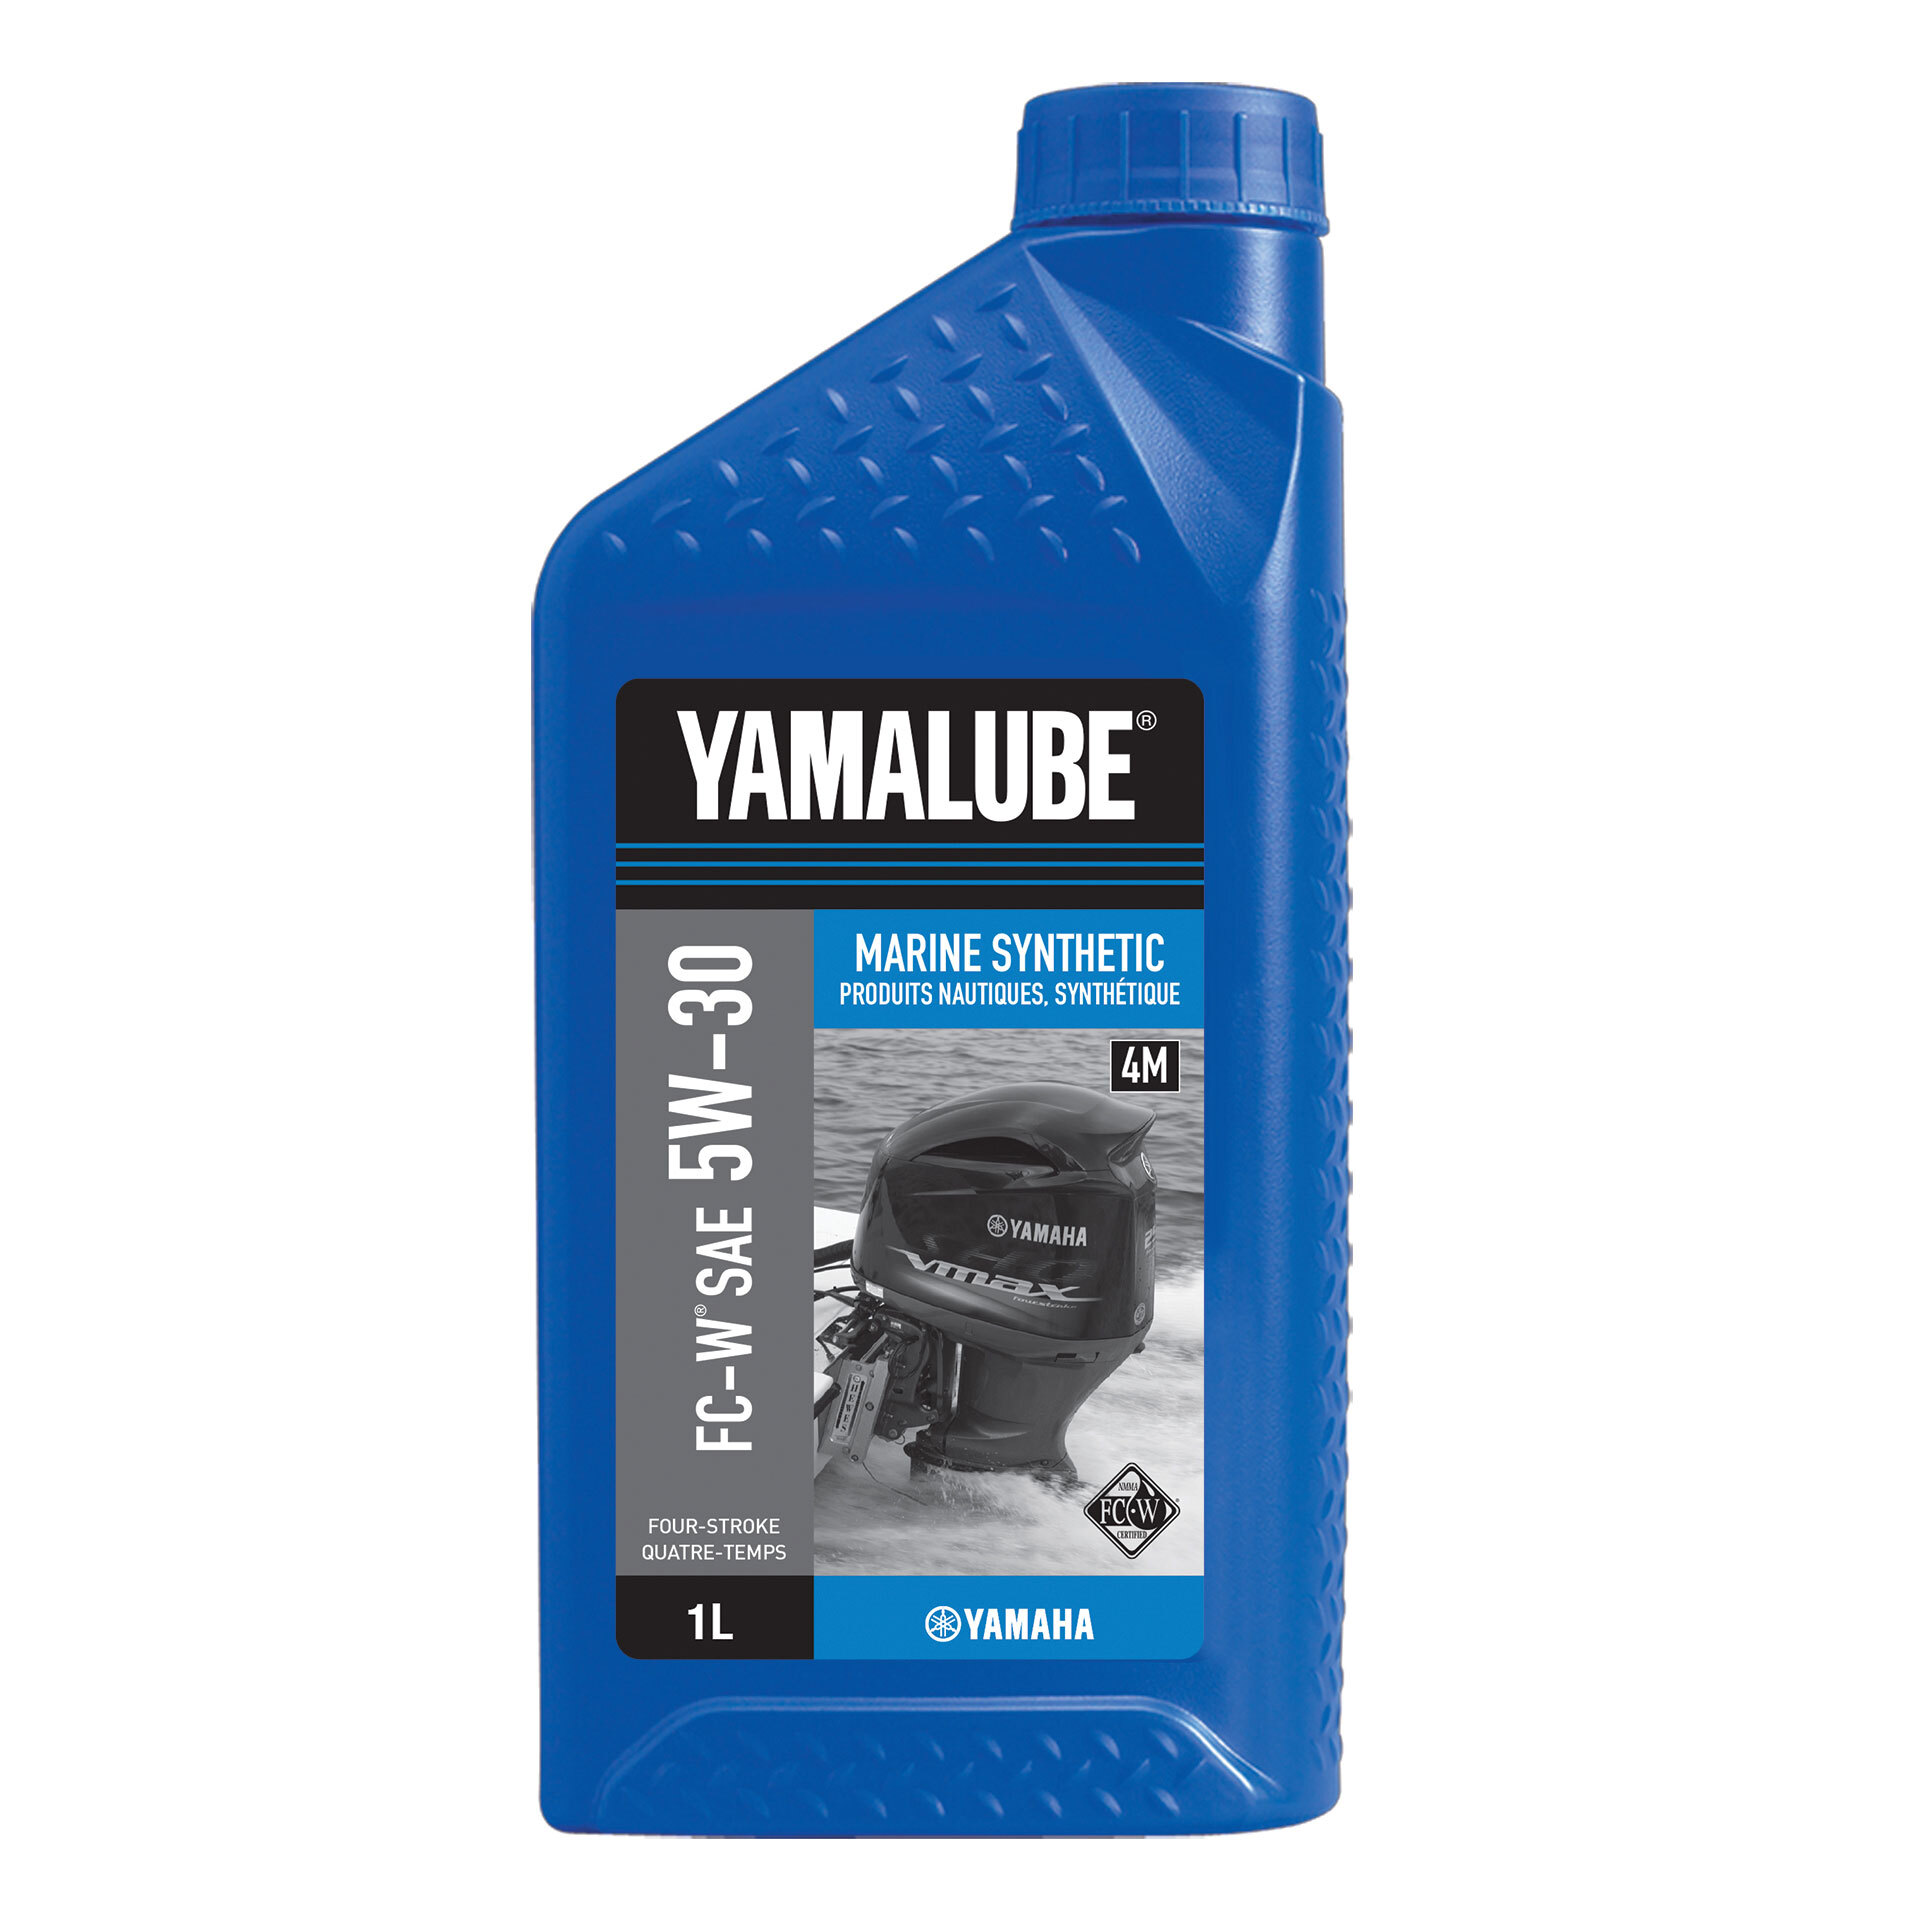 Yamalube® 5W 30 4M Marine Synthetic Engine Oil